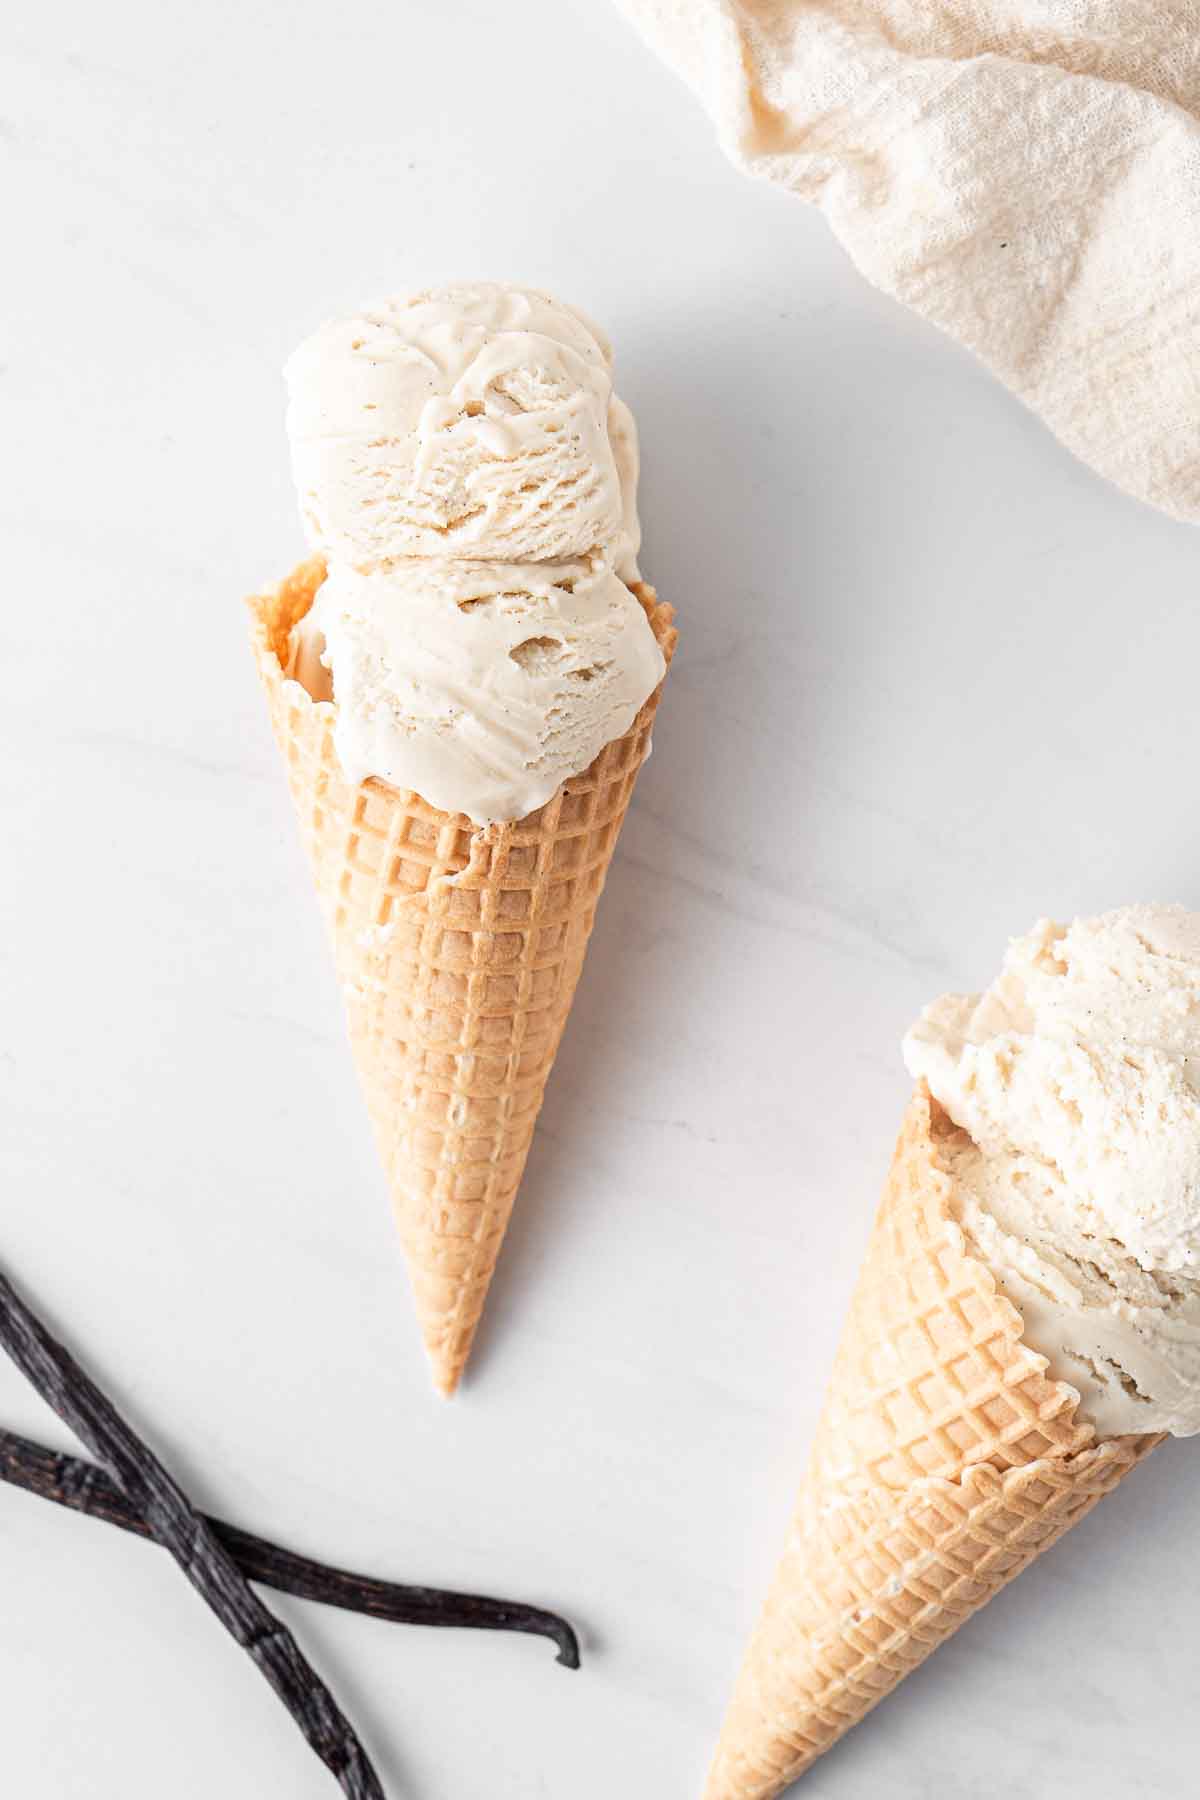 Ice cream cone with 2 scoops of vanilla ice cream.